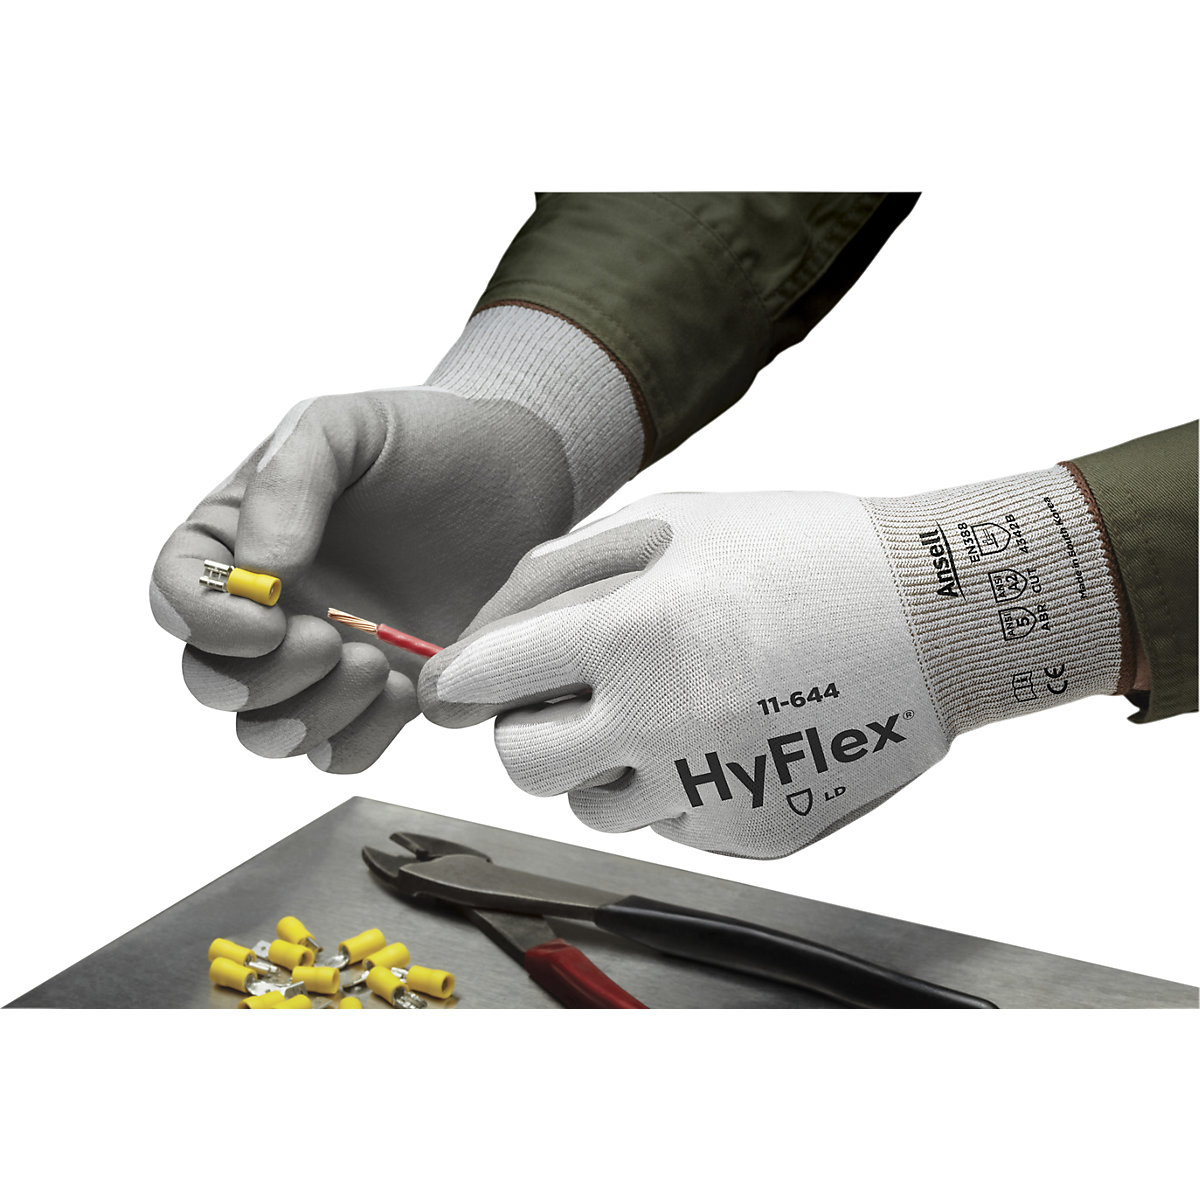 Delovne rokavice HyFlex® 11-644 – Ansell (Slika izdelka 4)-3